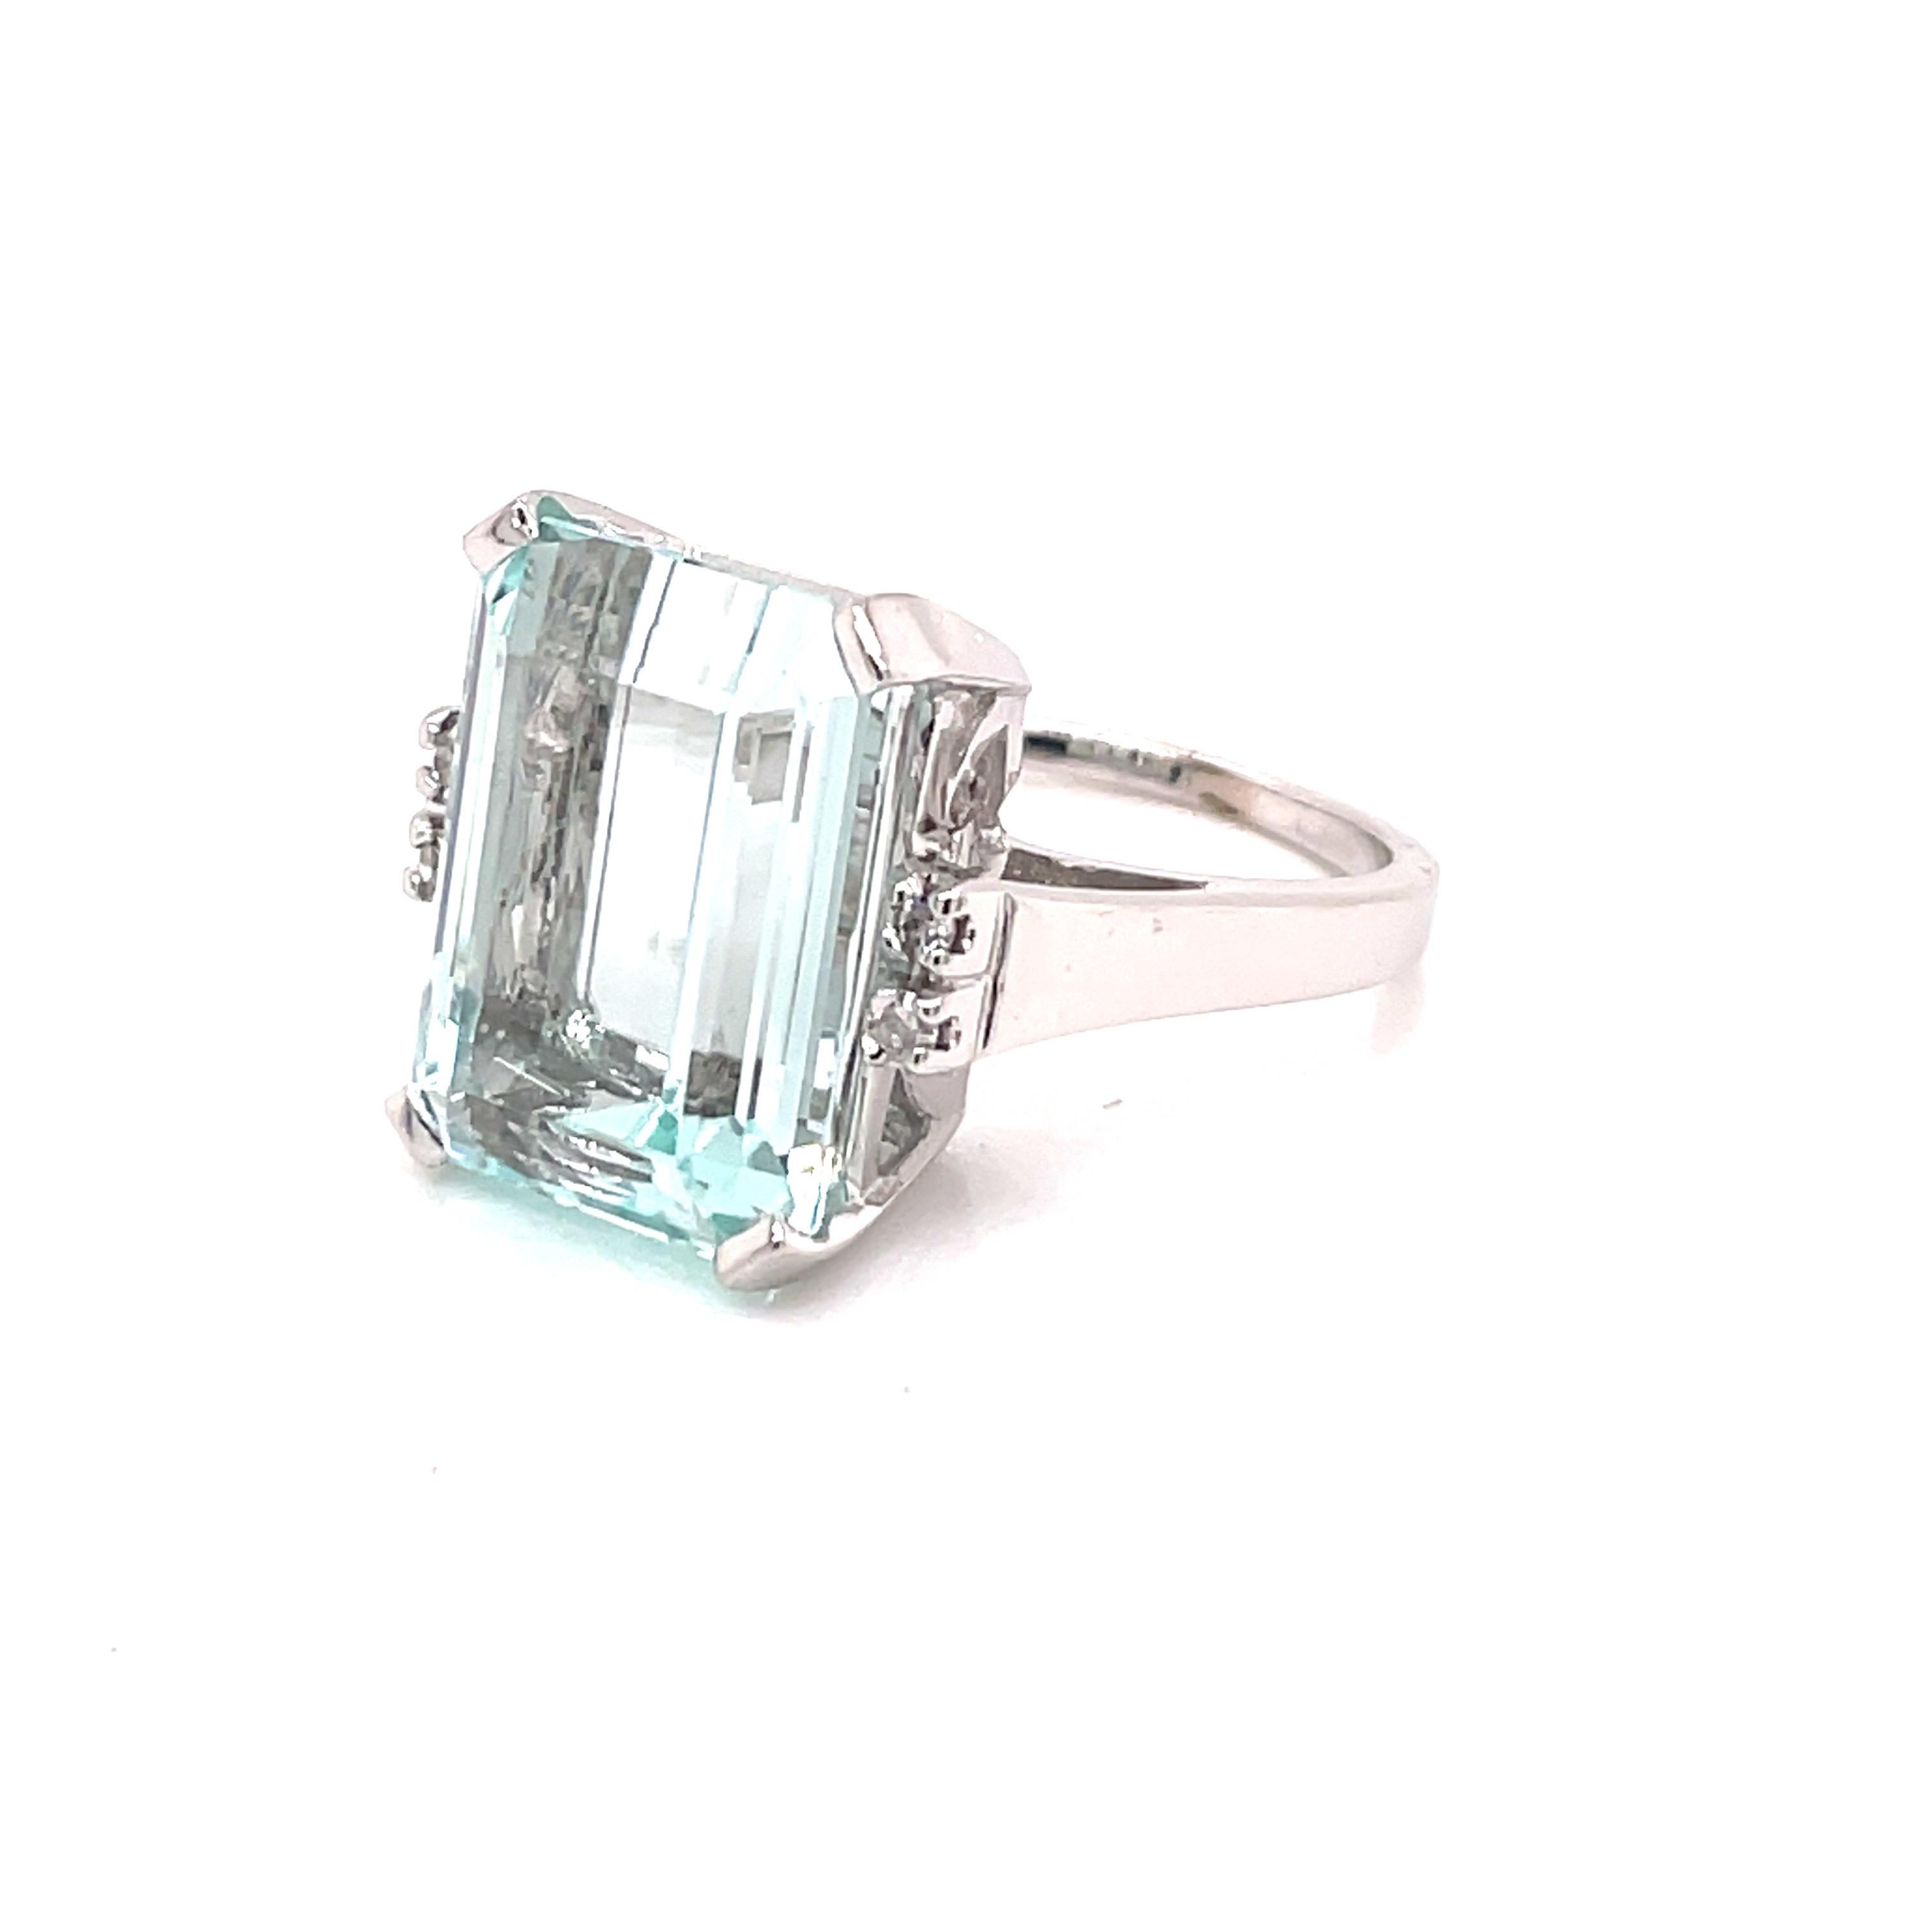 Women's Vintage 1960's 10ct Emerald Cut Aquamarine Ring with Diamonds